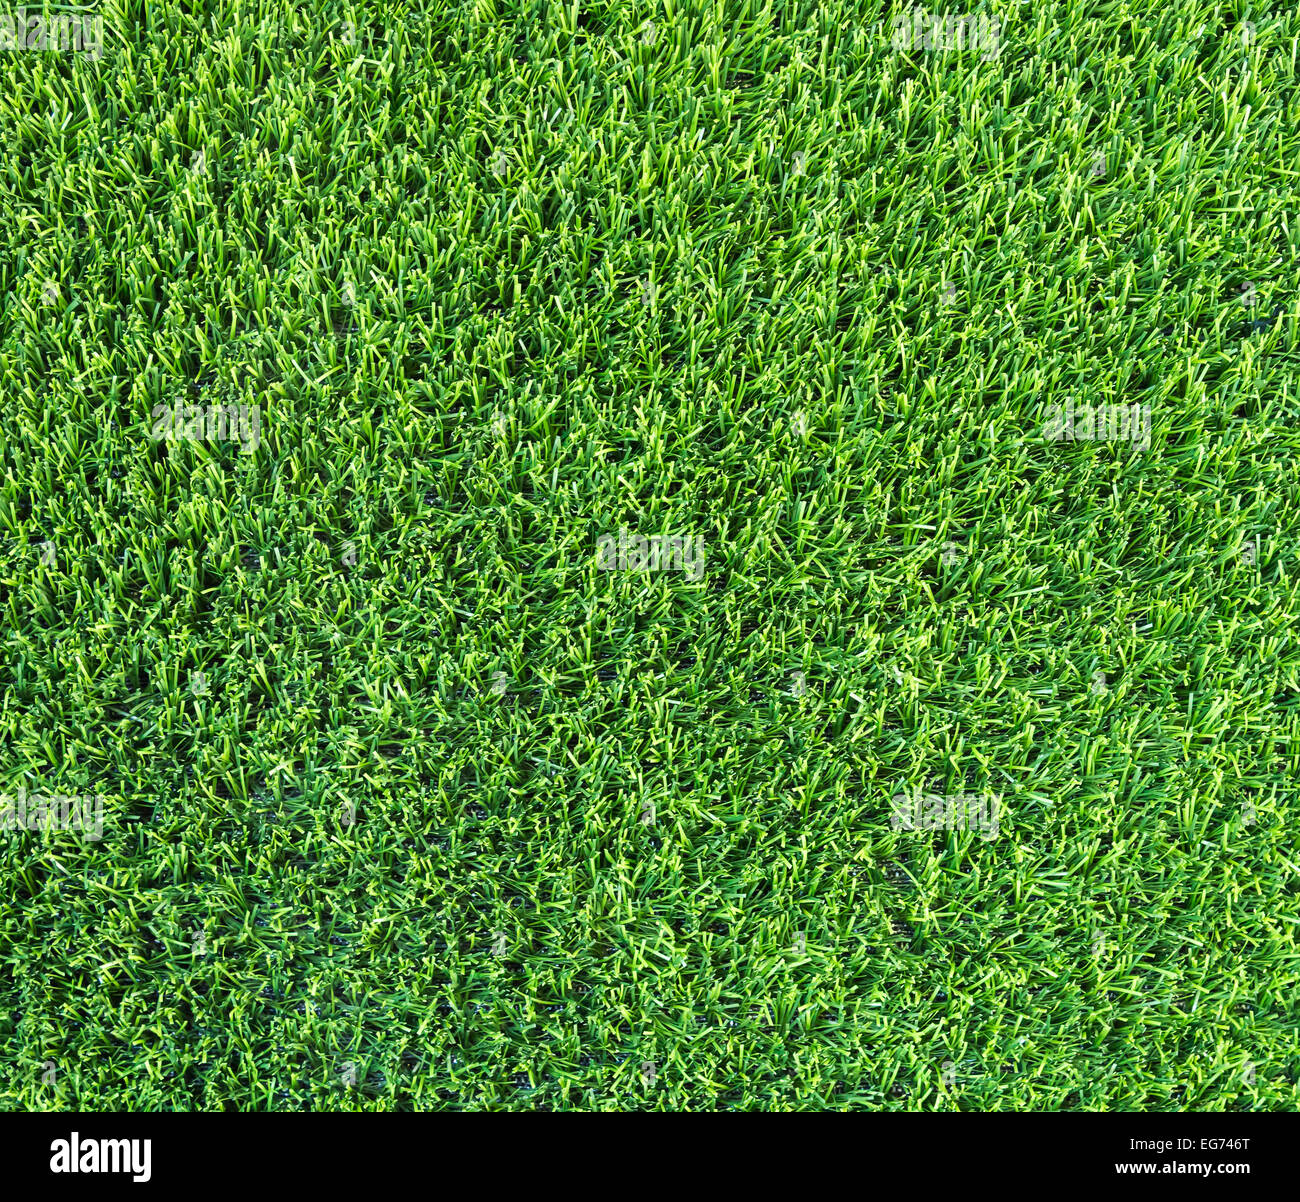 Artificial grass of the indoor football stadium. Stock Photo